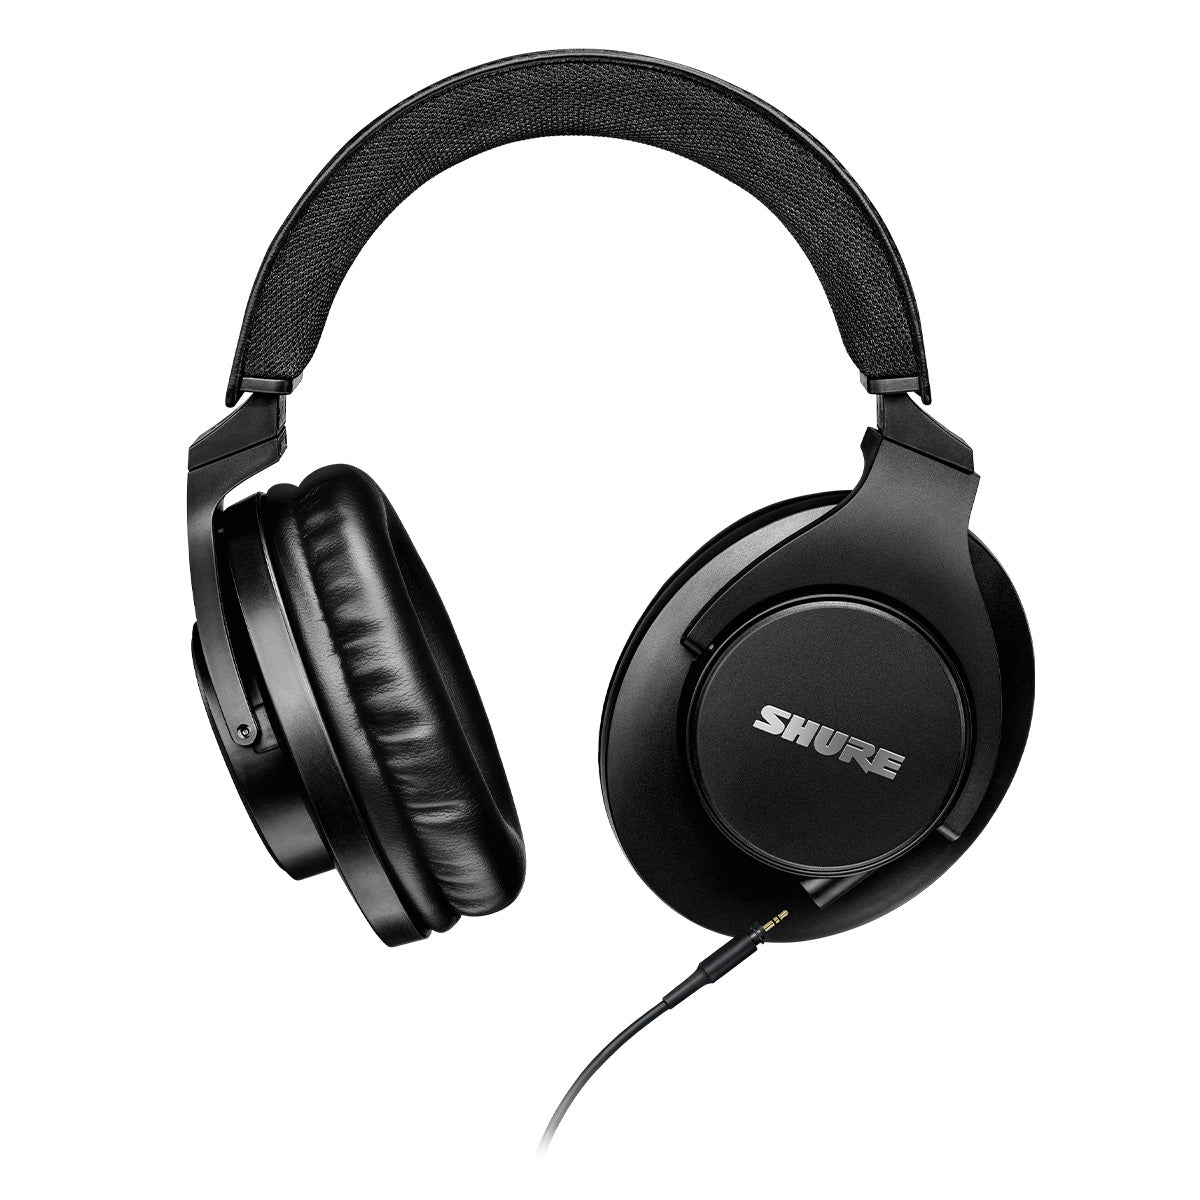 Shure SRH440A Closed-back Professional Studio Headphones